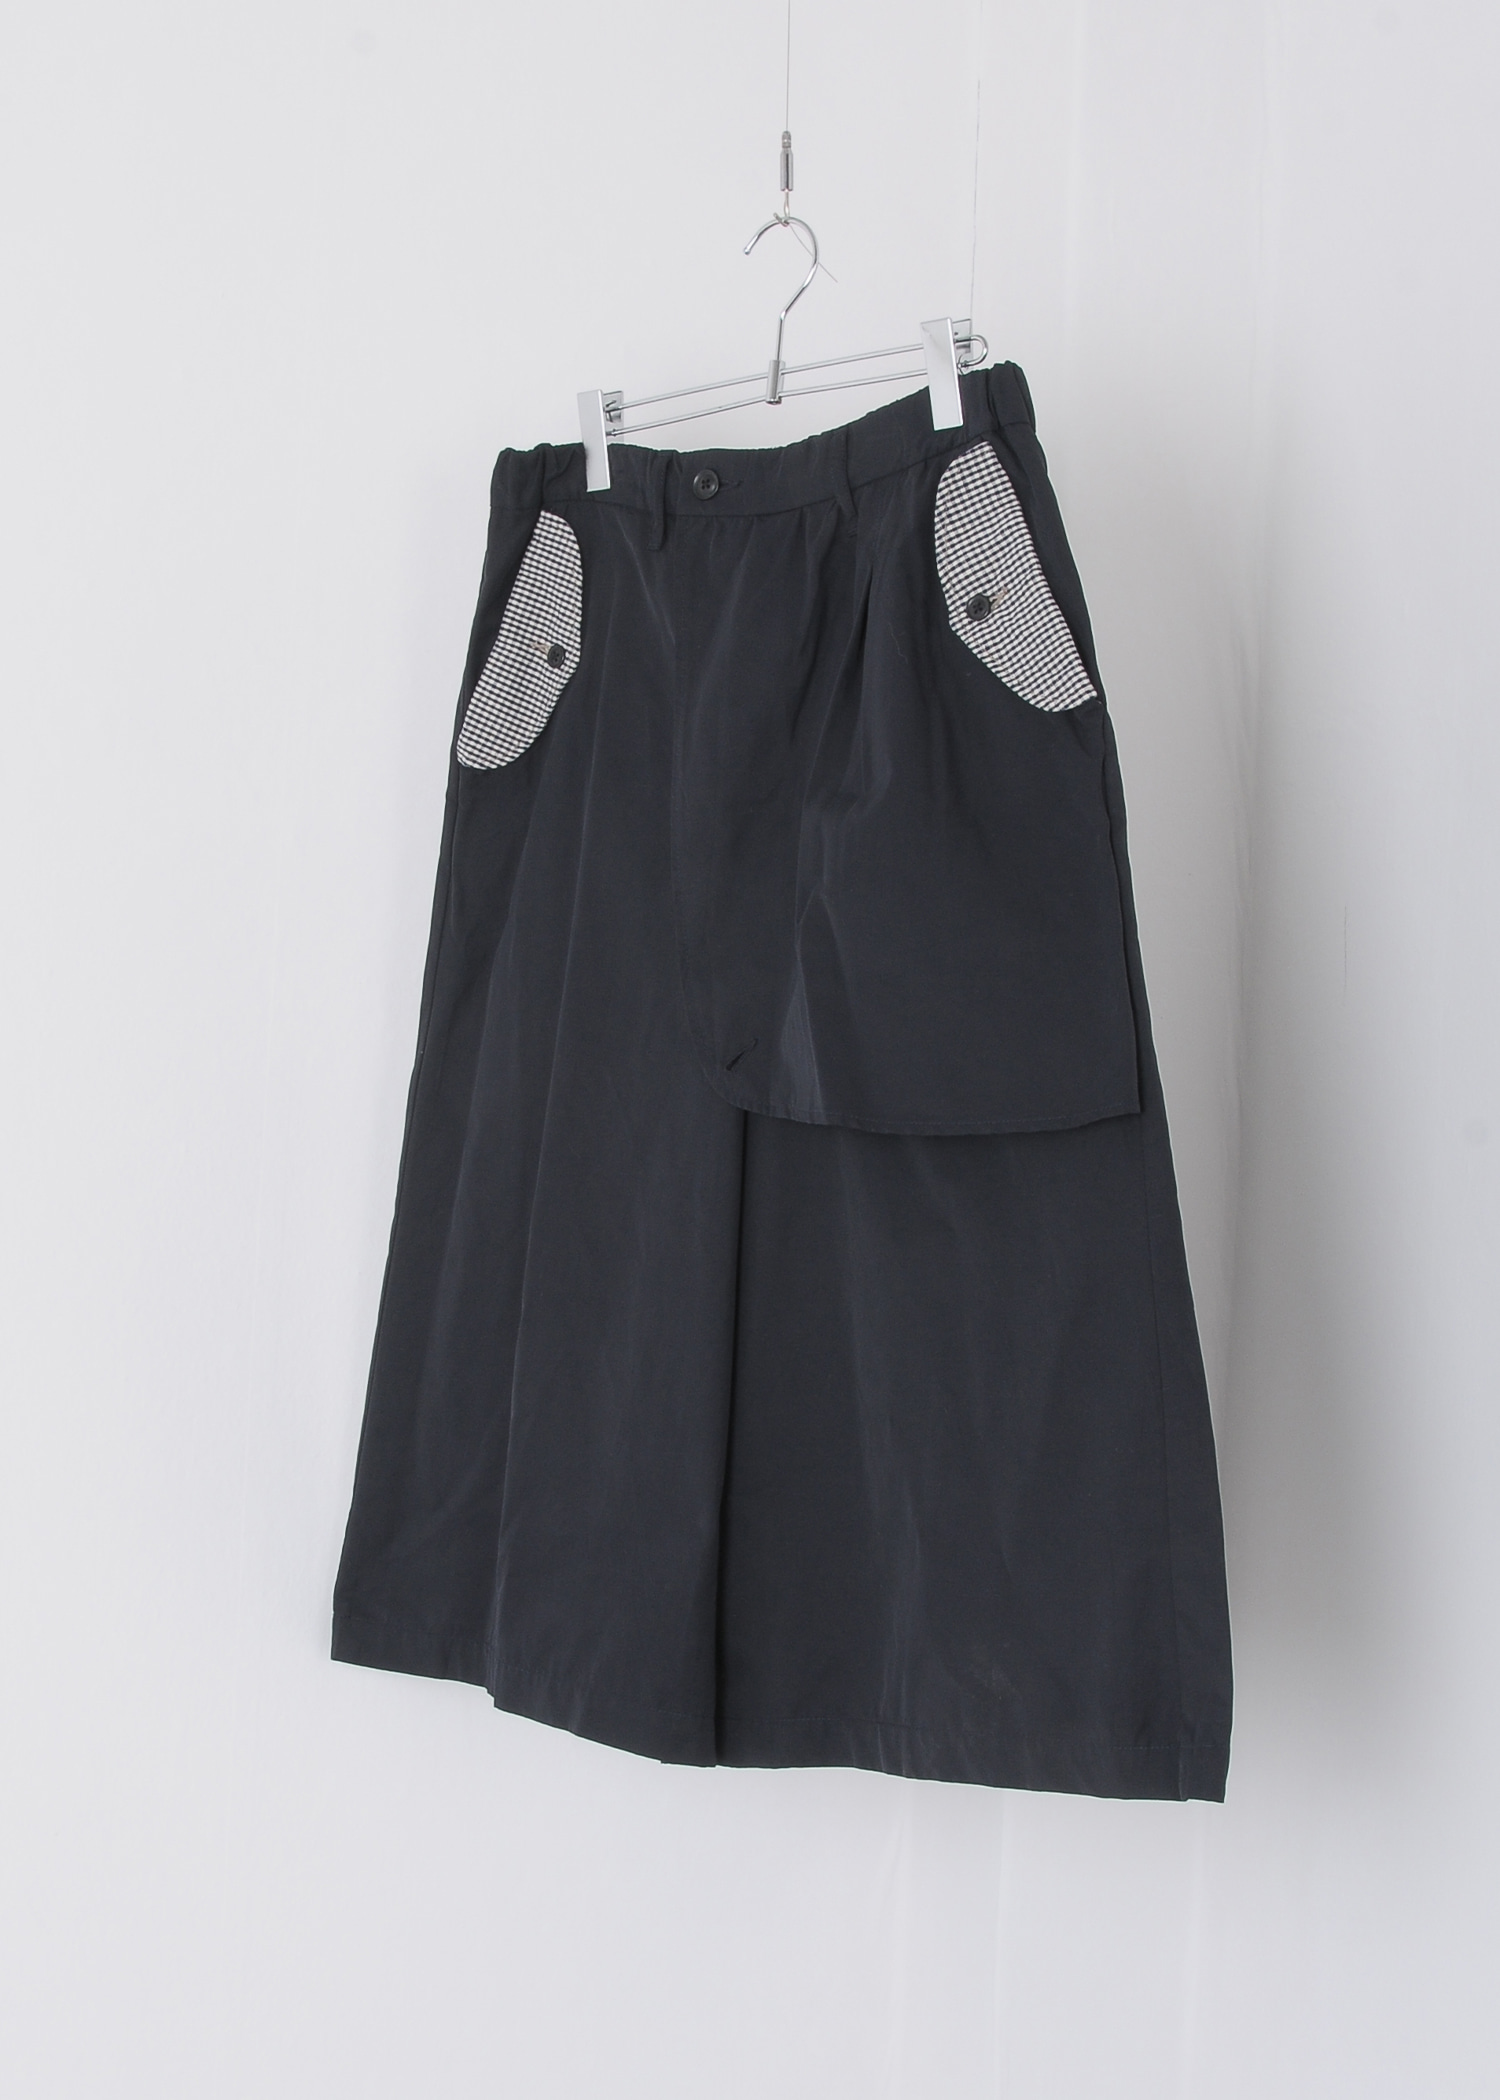 FRAPBOIS skirts pants